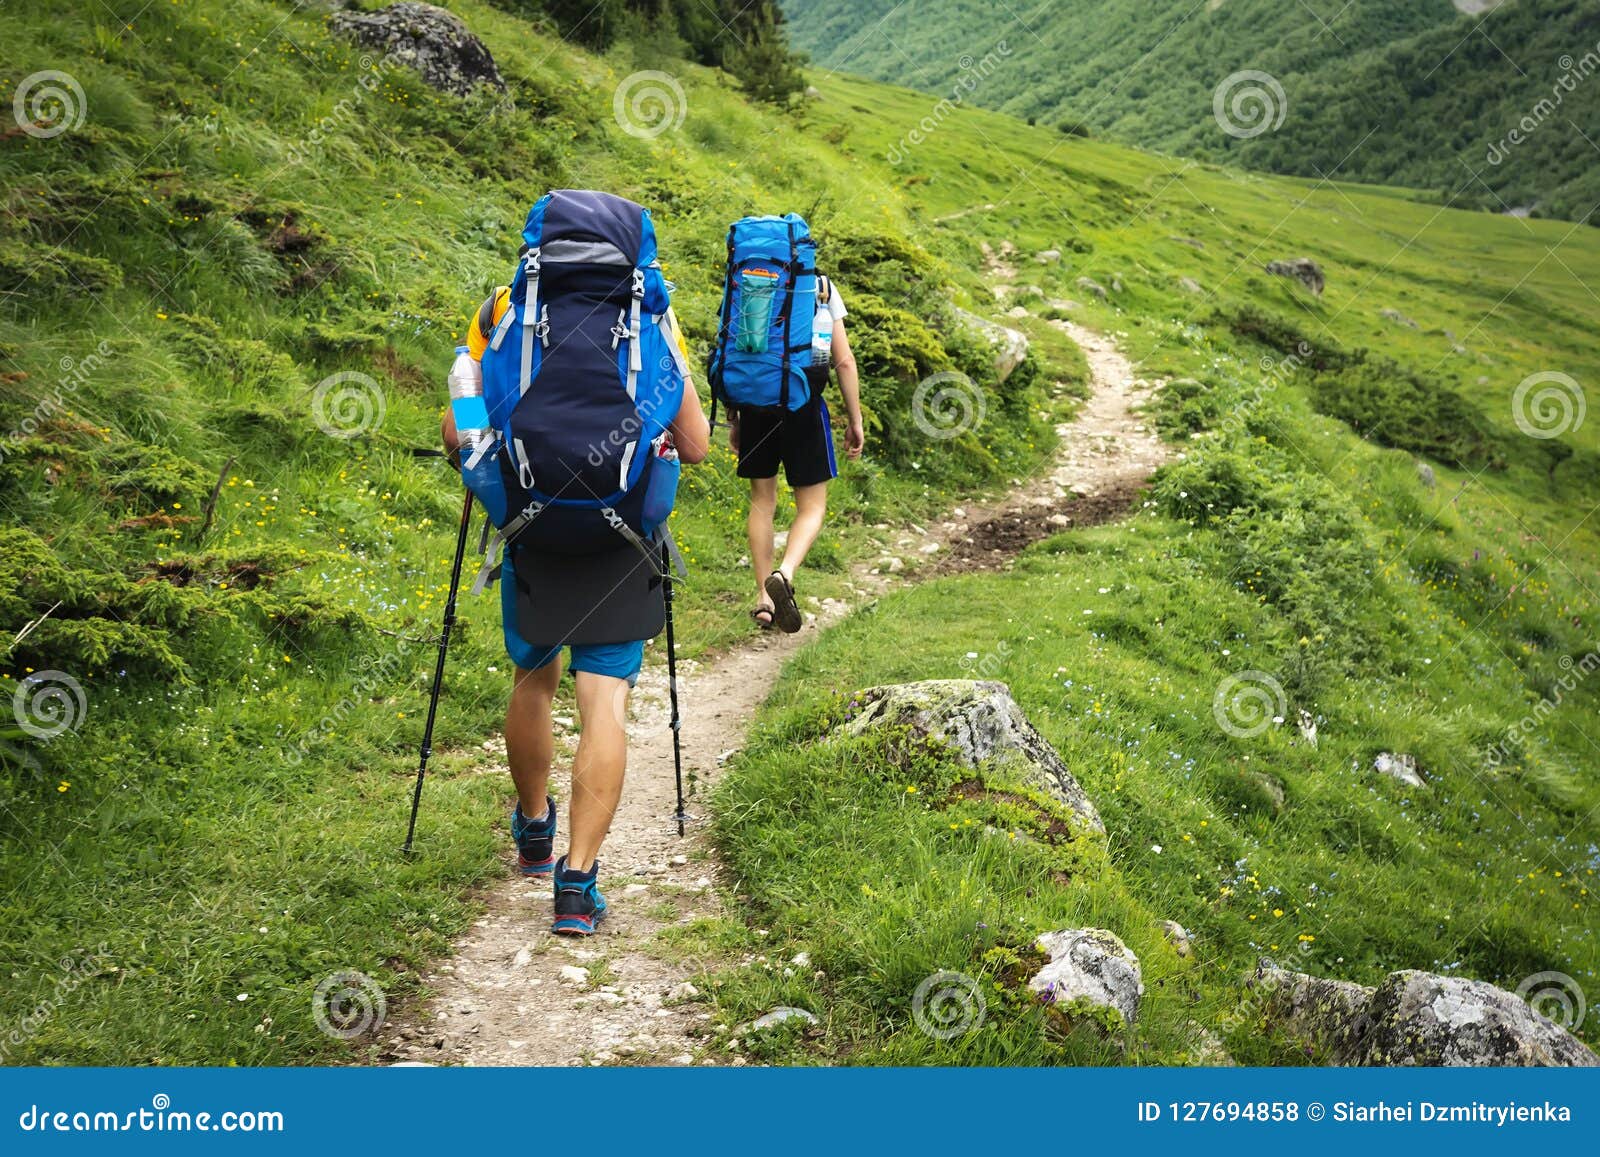 hiking trail in svaneti region, georgia. two hikers men walk on trek in mountain. tourists with backpacks hike in highlands